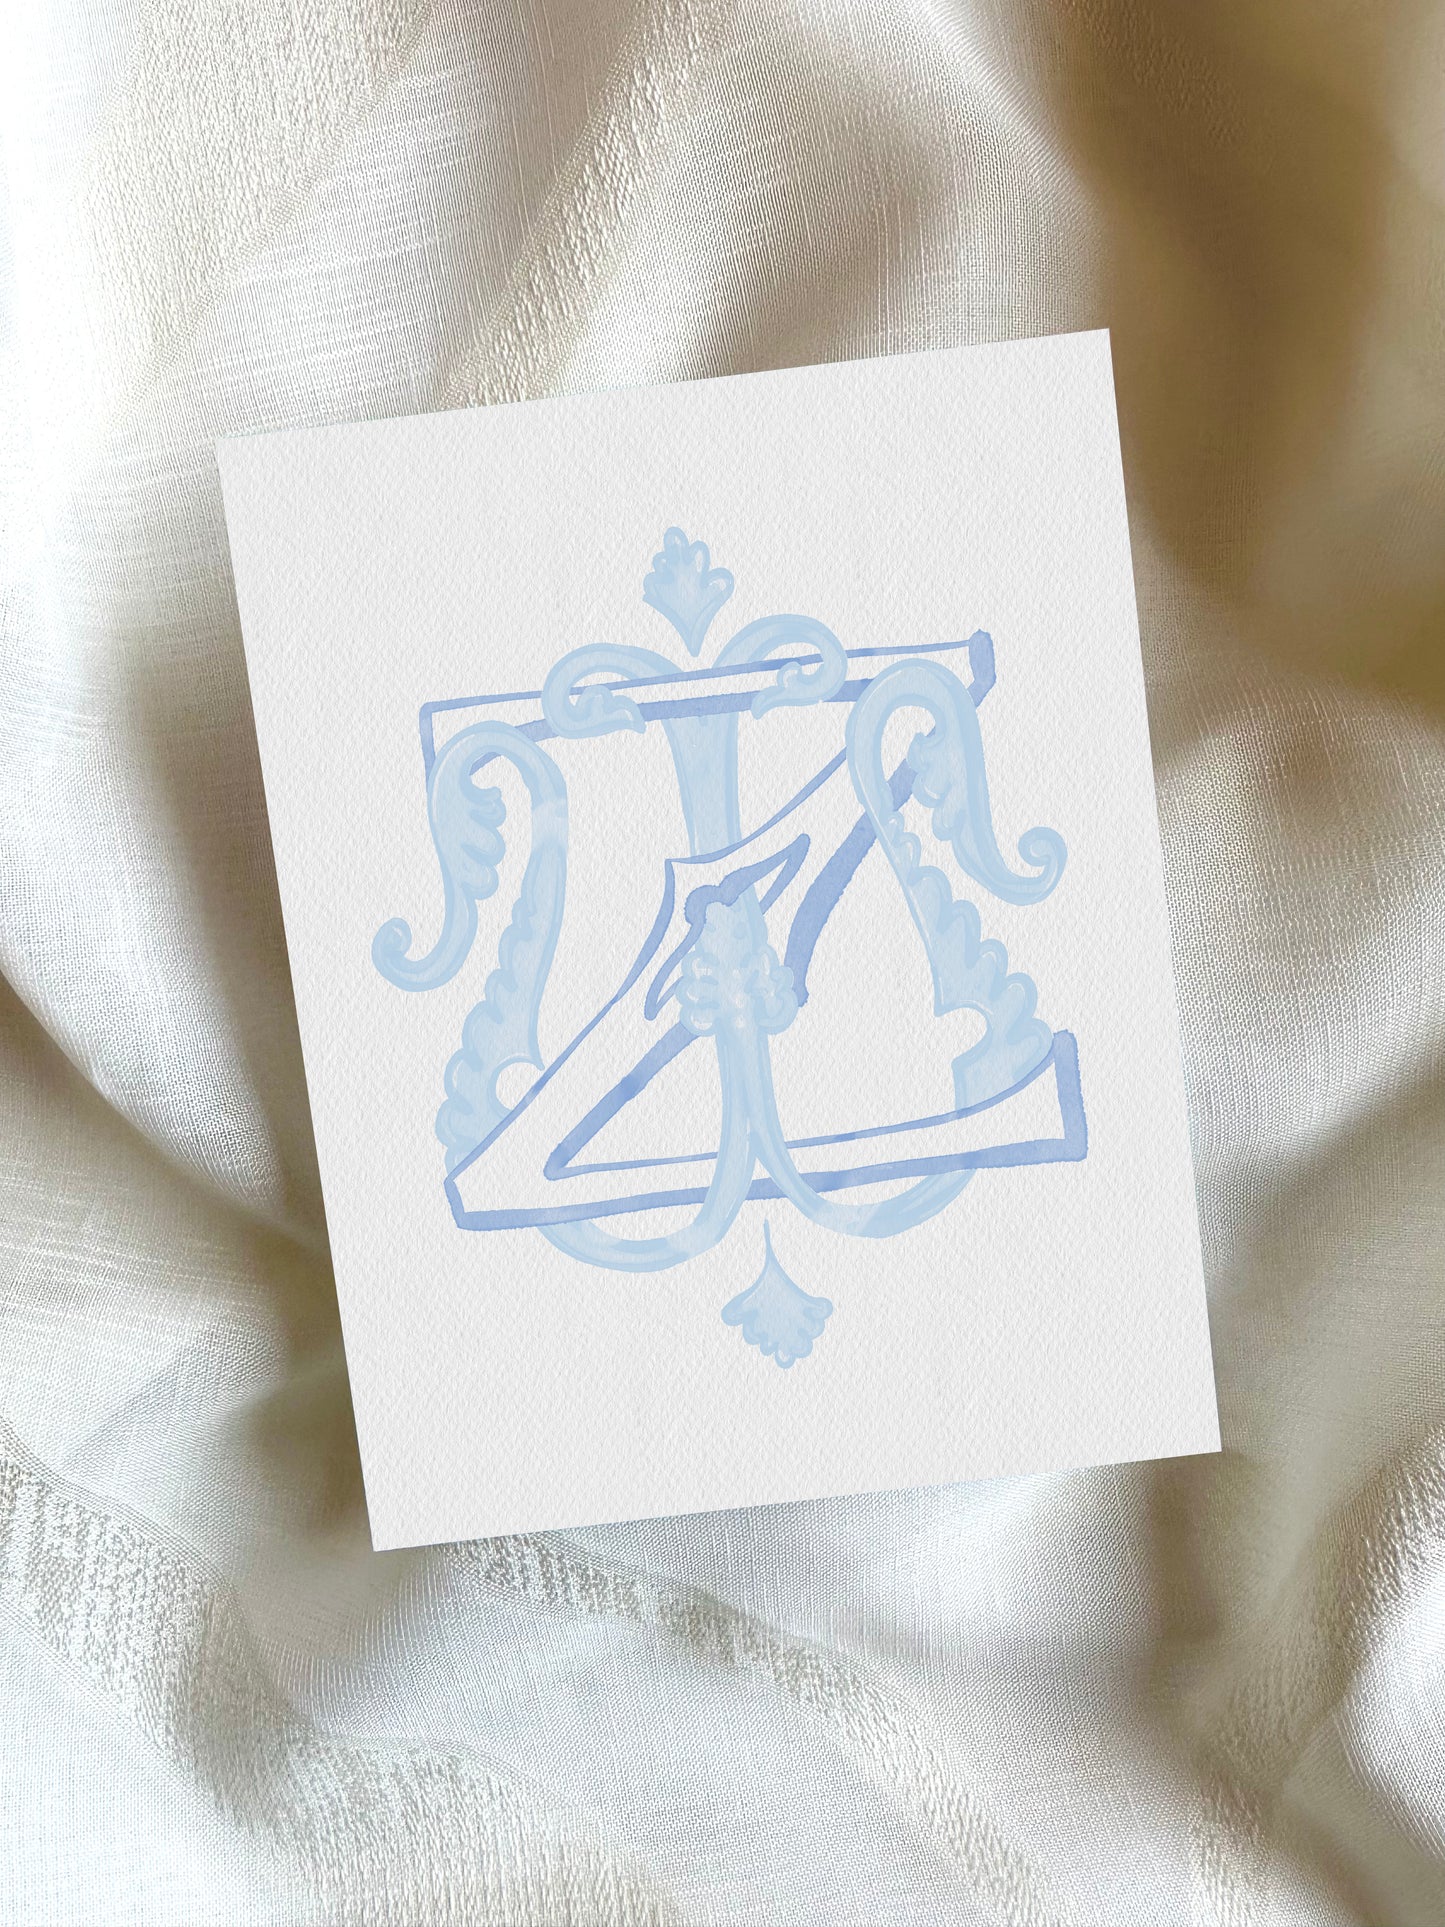 2 Letter Monogram with Letters WZ ZW | Digital Download - Wedding Monogram SVG, Personal Logo, Wedding Logo for Wedding Invitations The Wedding Crest Lab